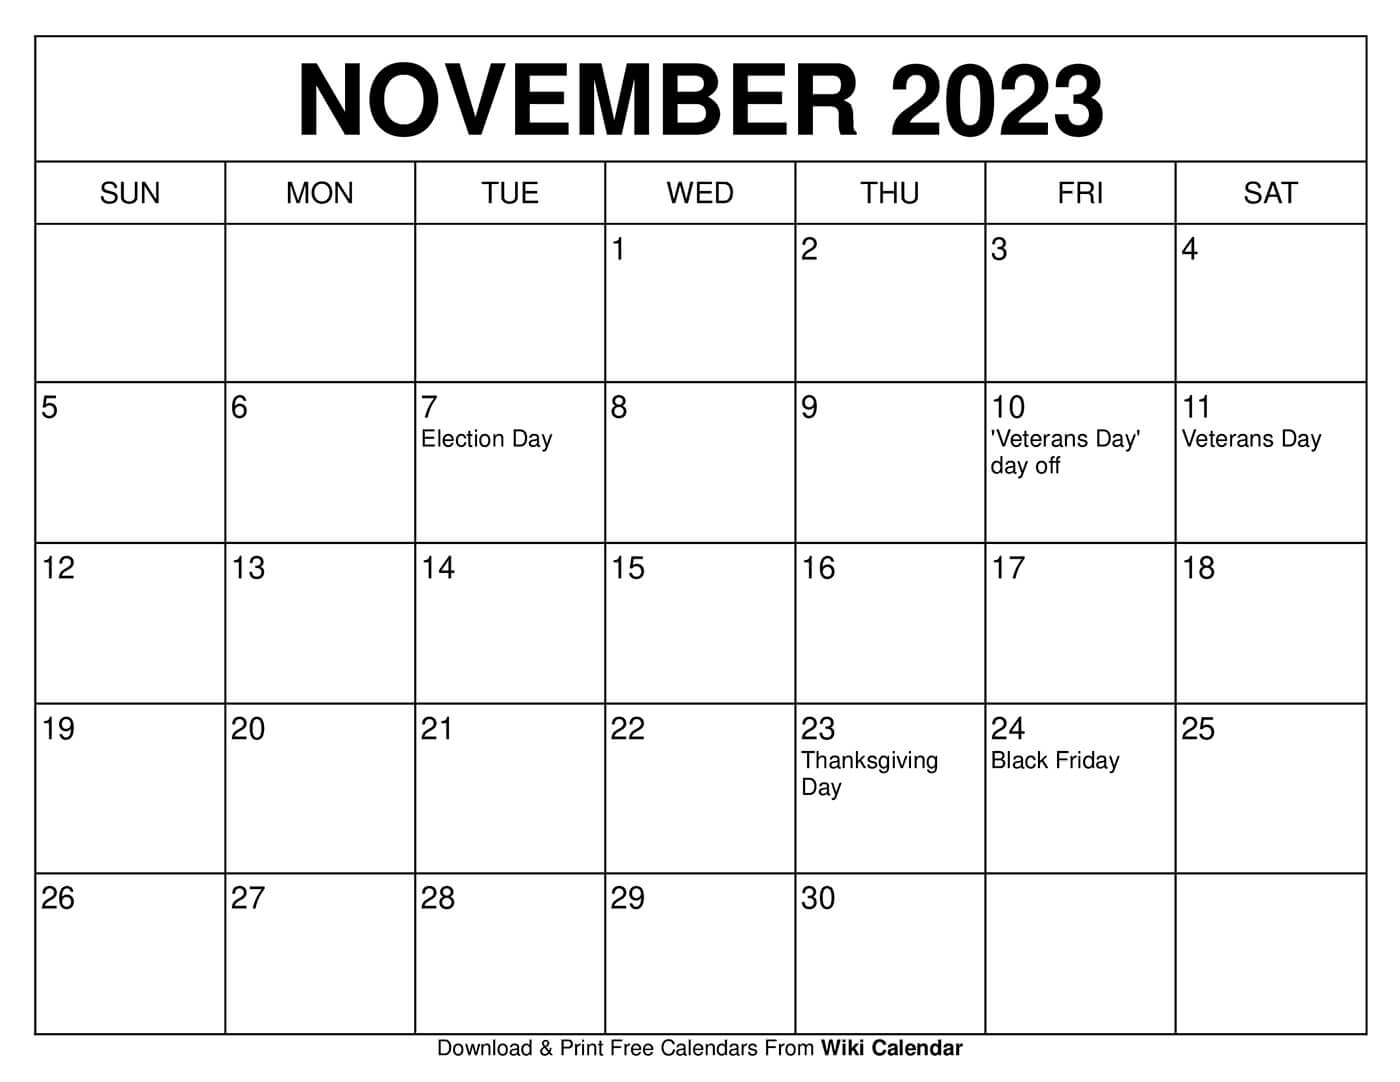 calendar-2023-november-calendar-printable-get-calendar-2023-update